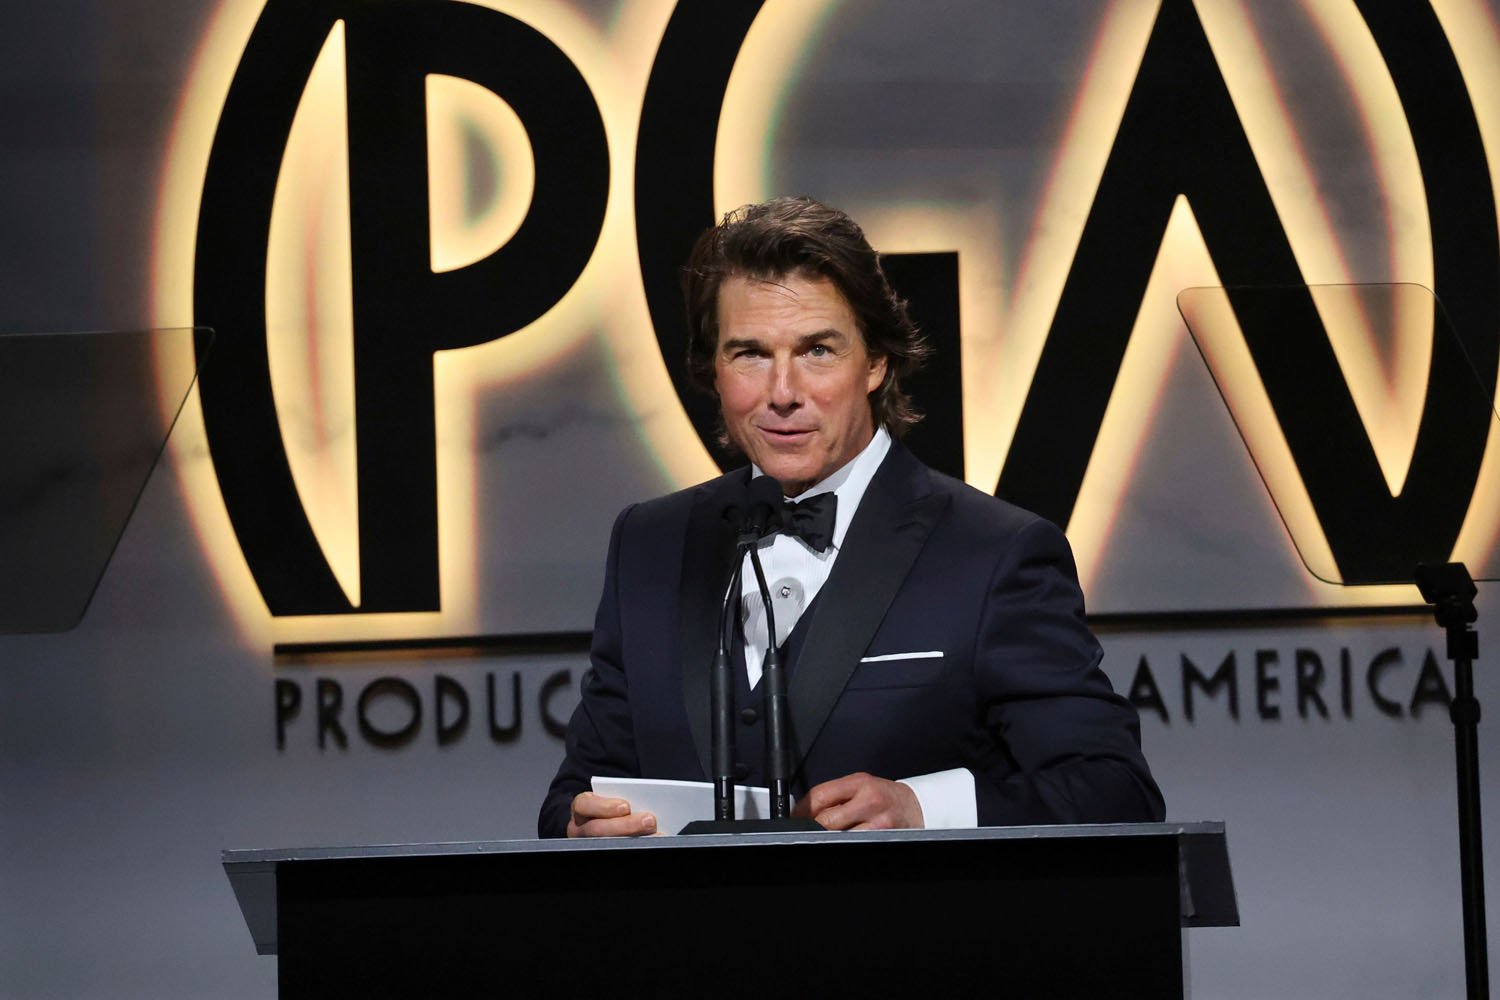 Tom Cruise sings "Hakuna Matata" dressed as Pumbaa from The Lion King